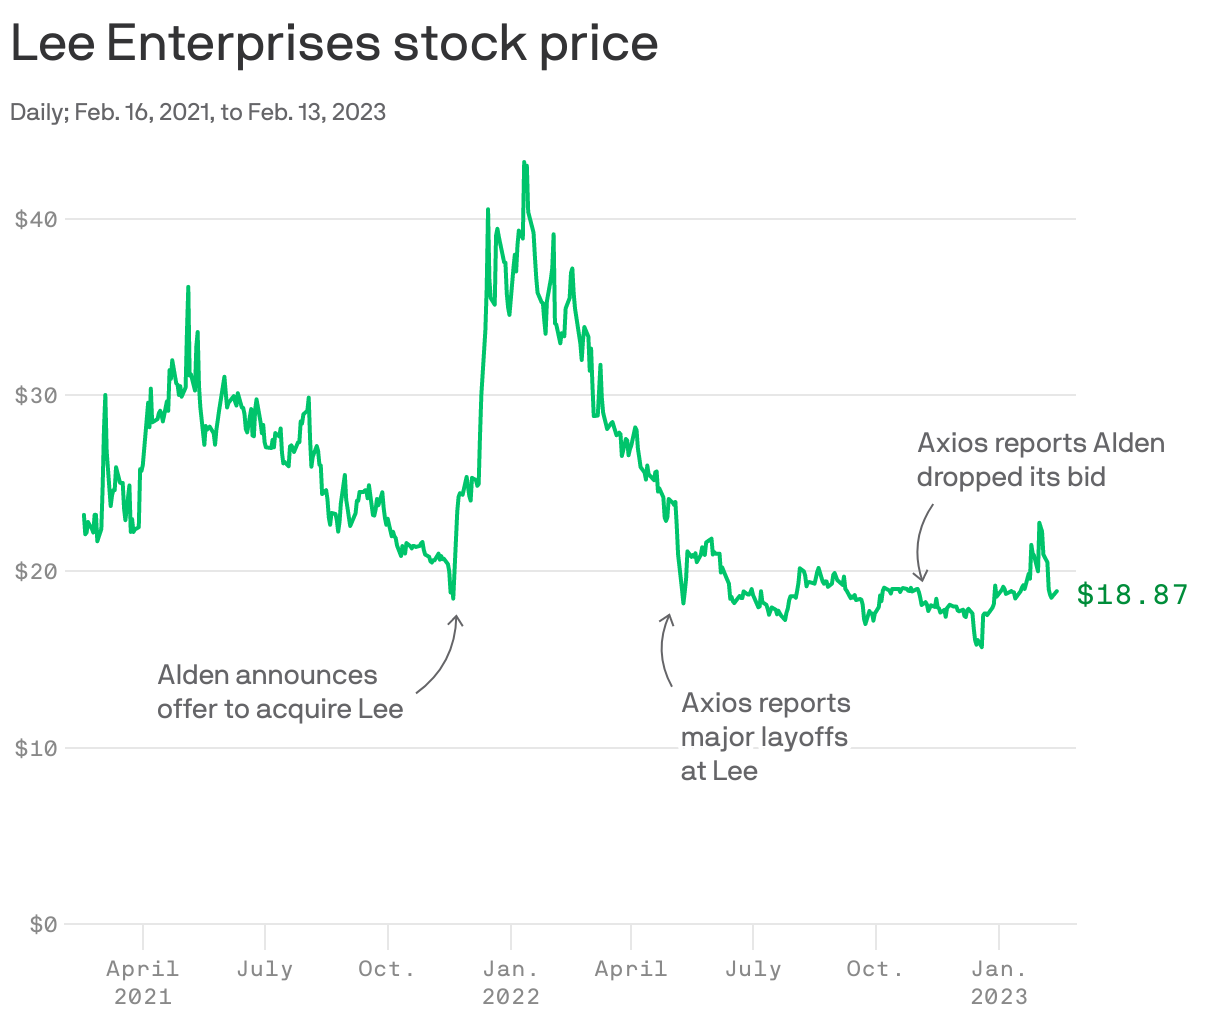 Lee Enterprises stock price